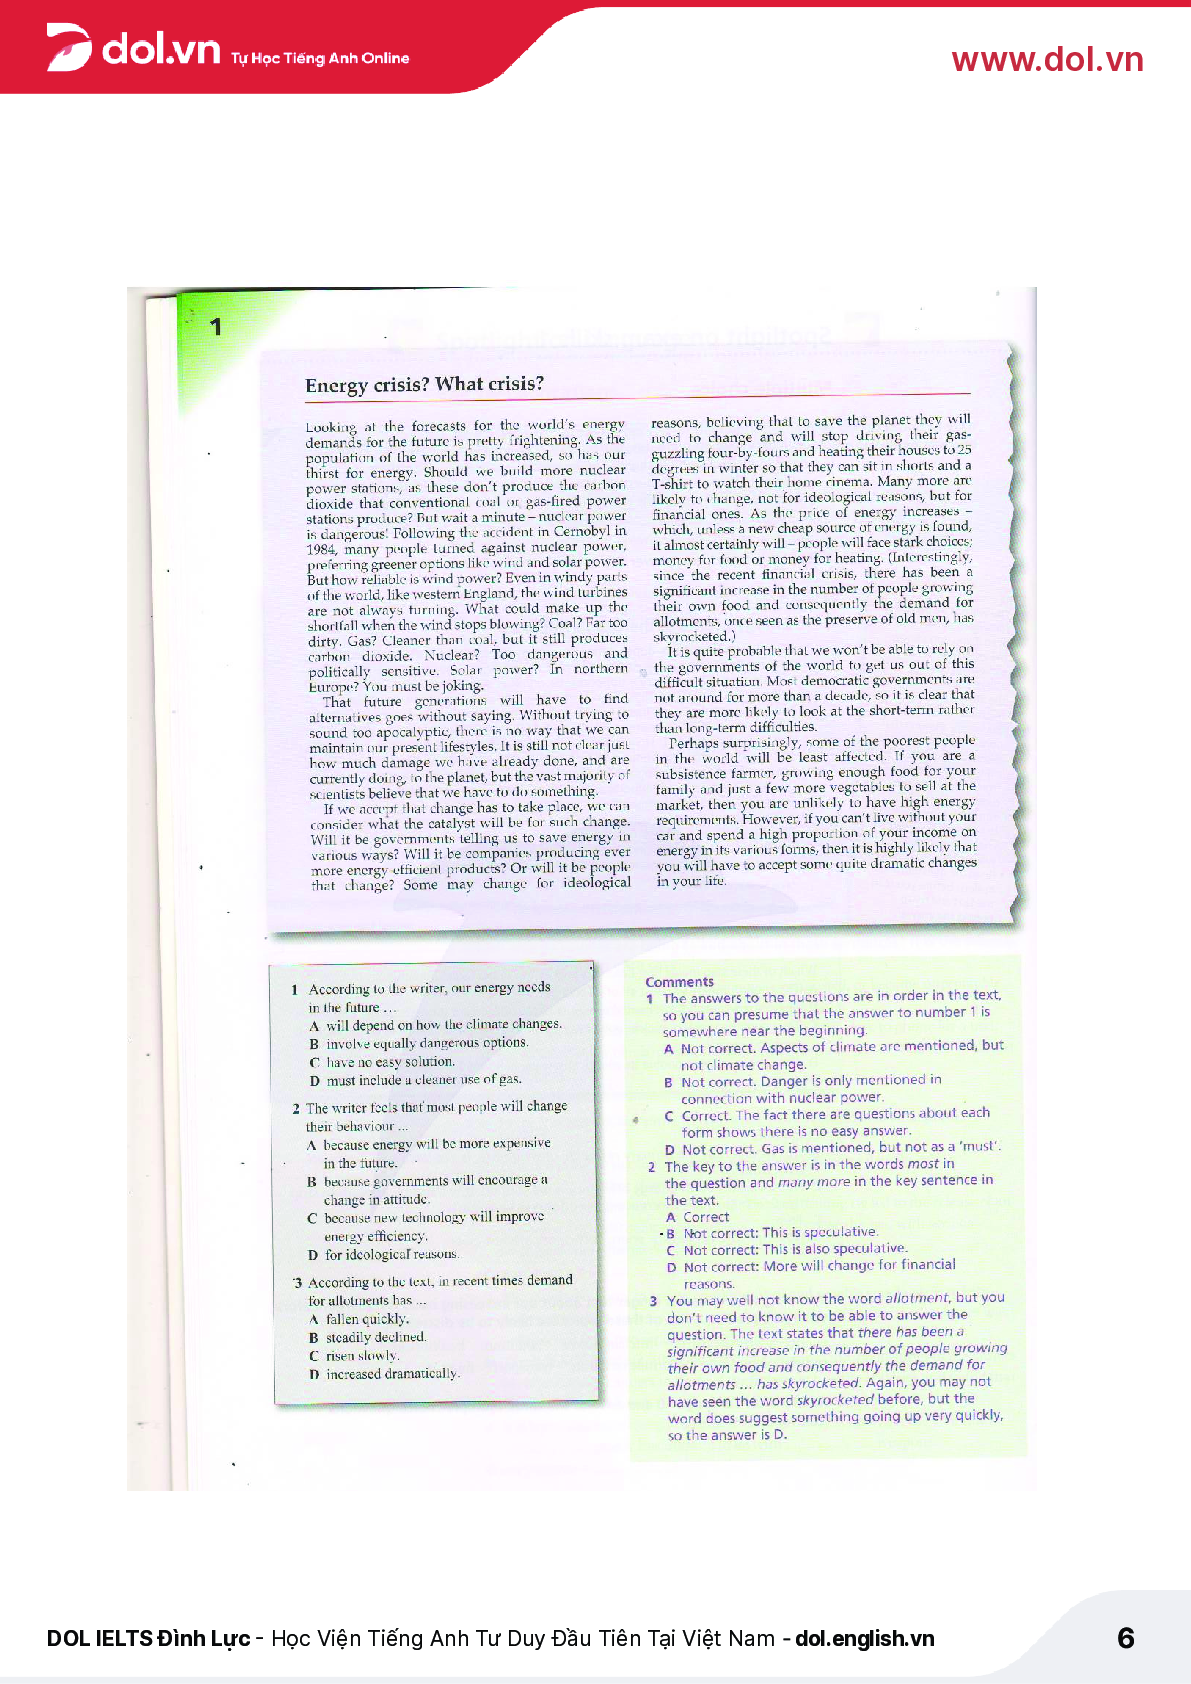 Sách IELTS Advantage Reading Skills pdf | Xem online, tải PDF miễn phí (trang 6)